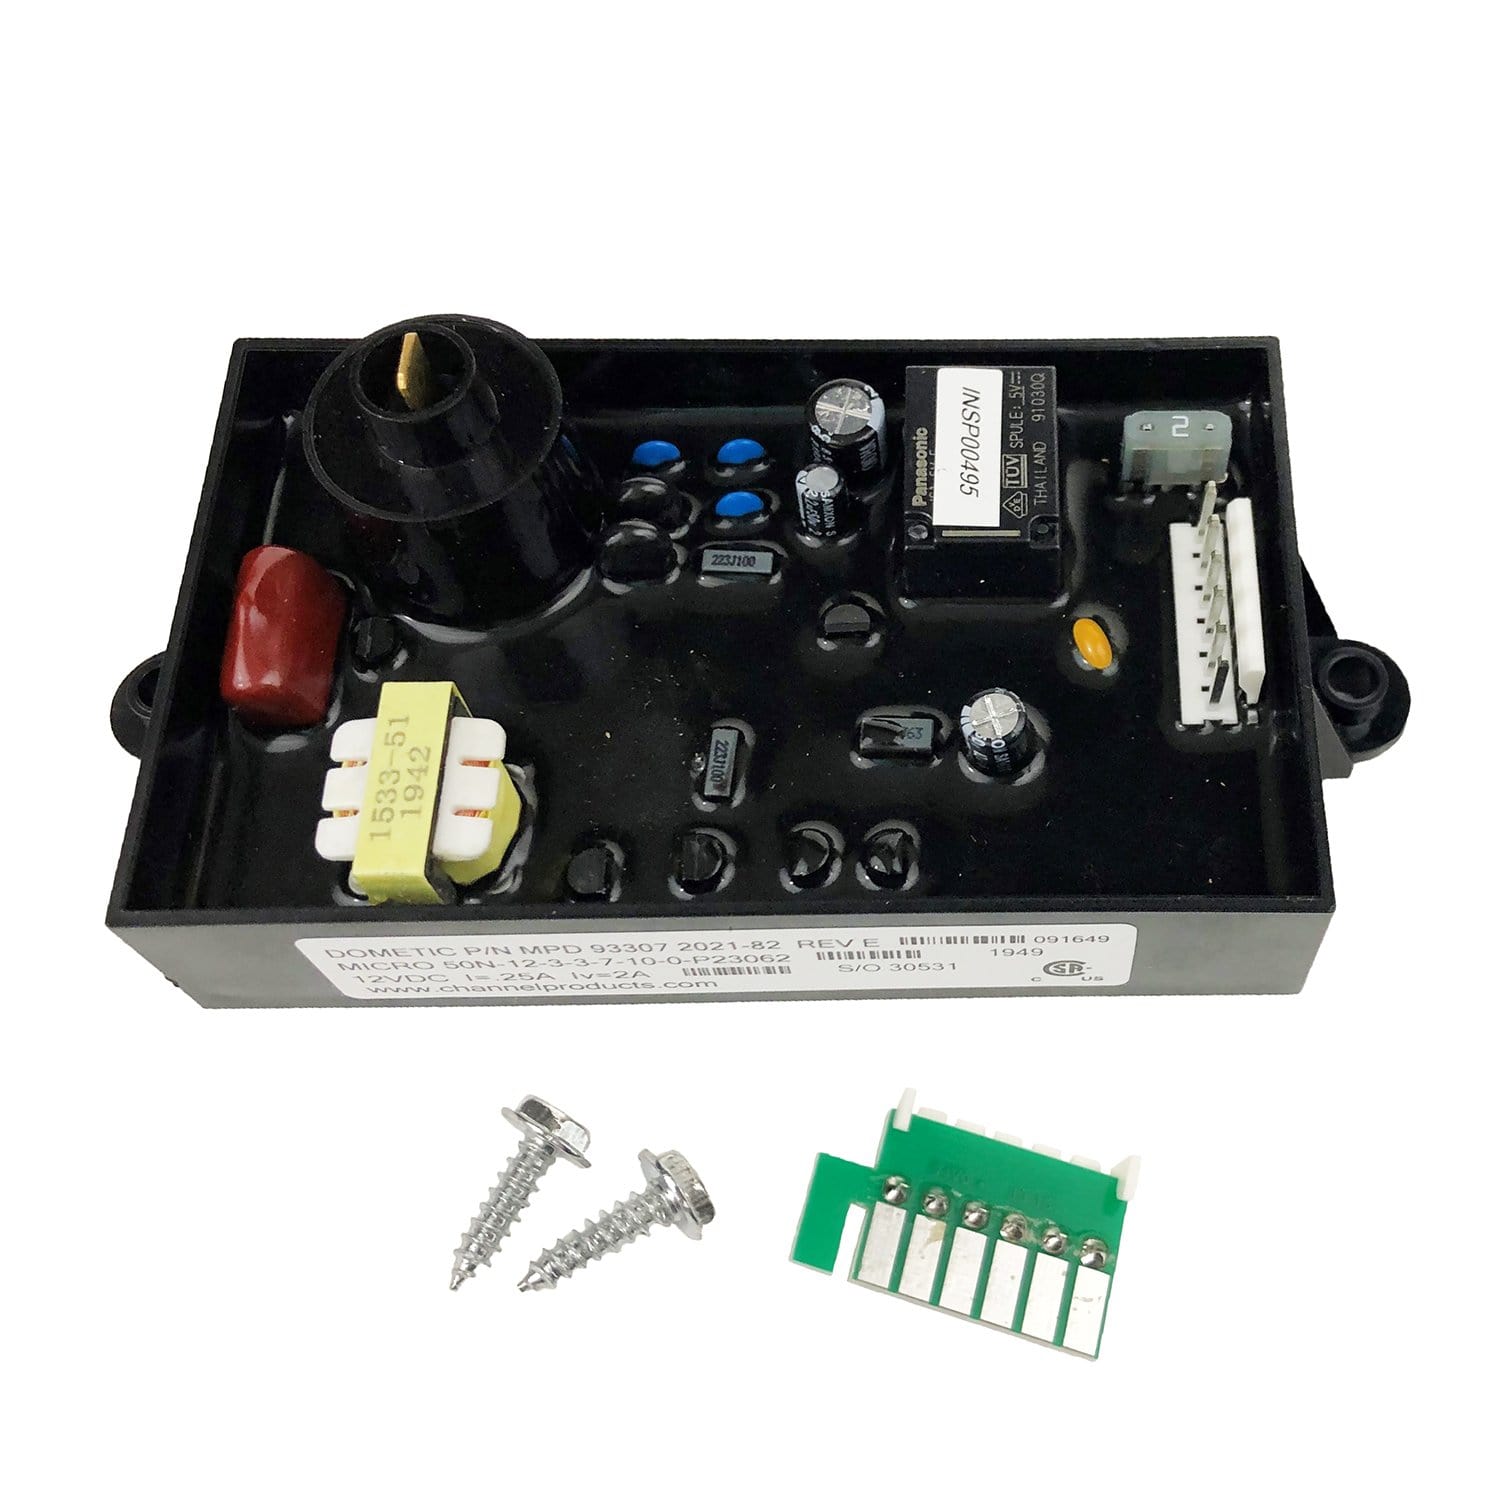 NBK Parts 12439K Ignition Board Kit Replaces OEM Part Number 93865